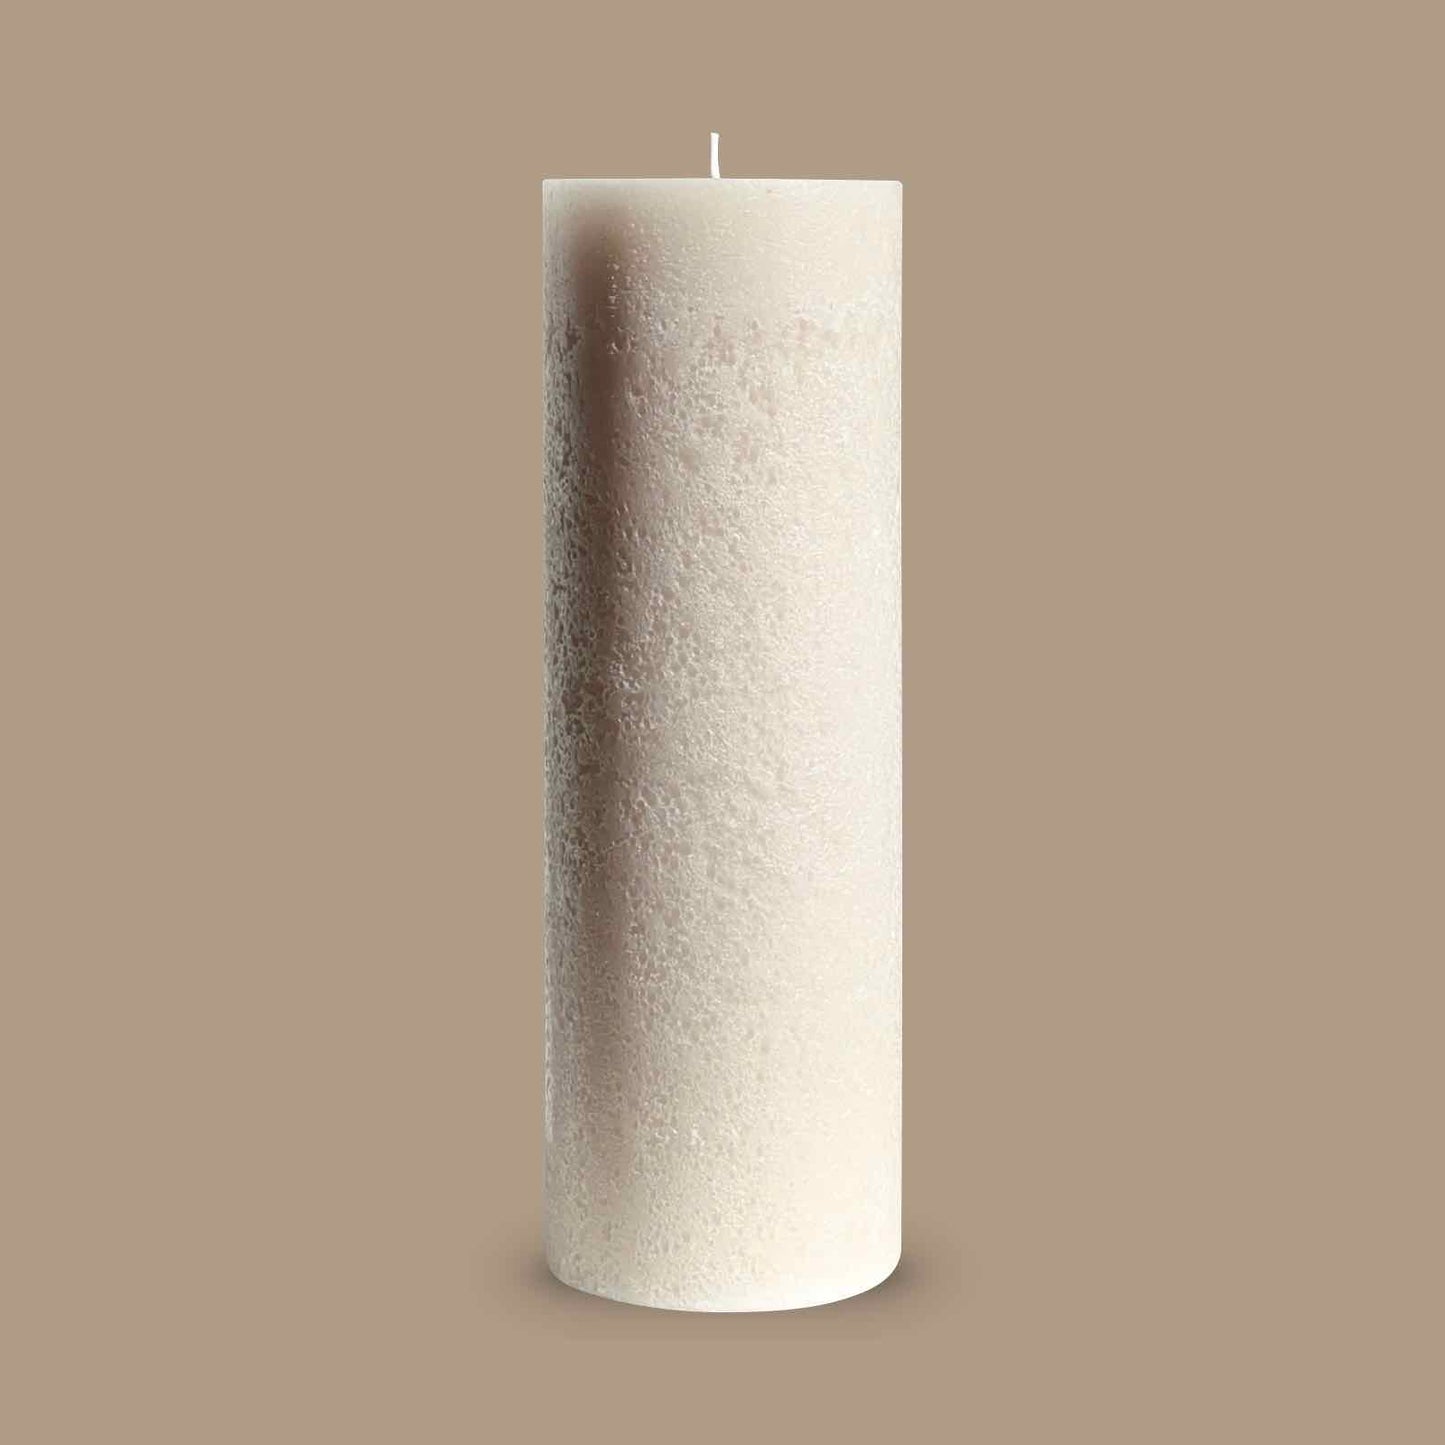 Extra large rustic pillar candle